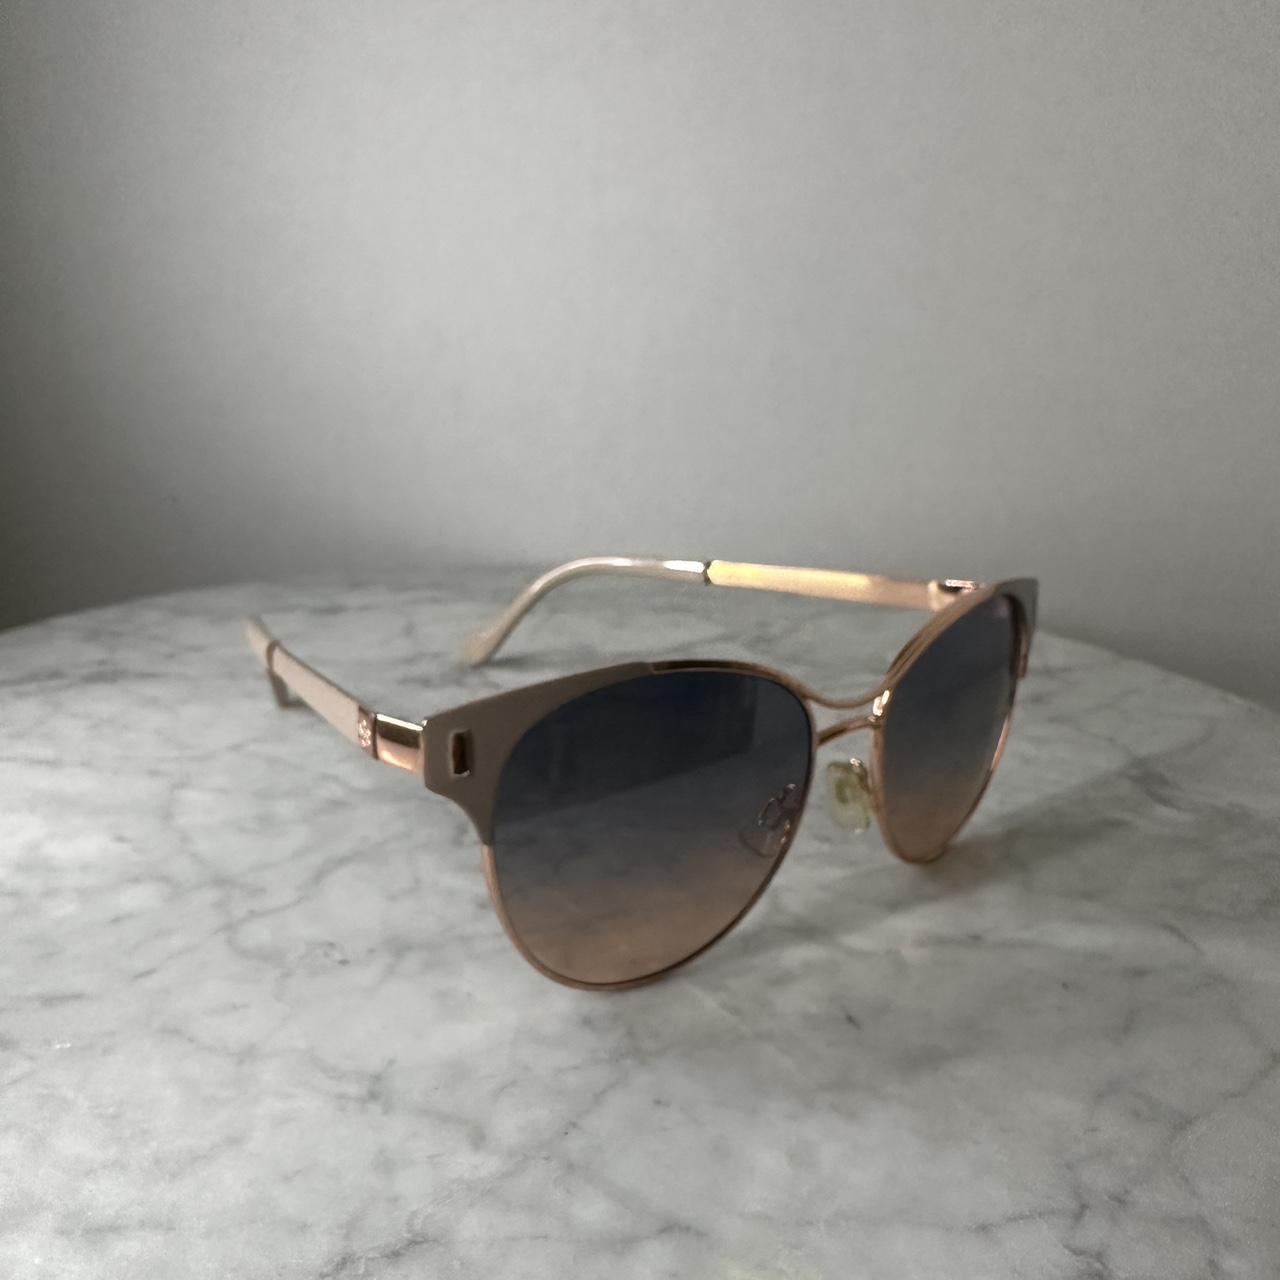 Jessica Simpson Women's Sunglasses | Depop